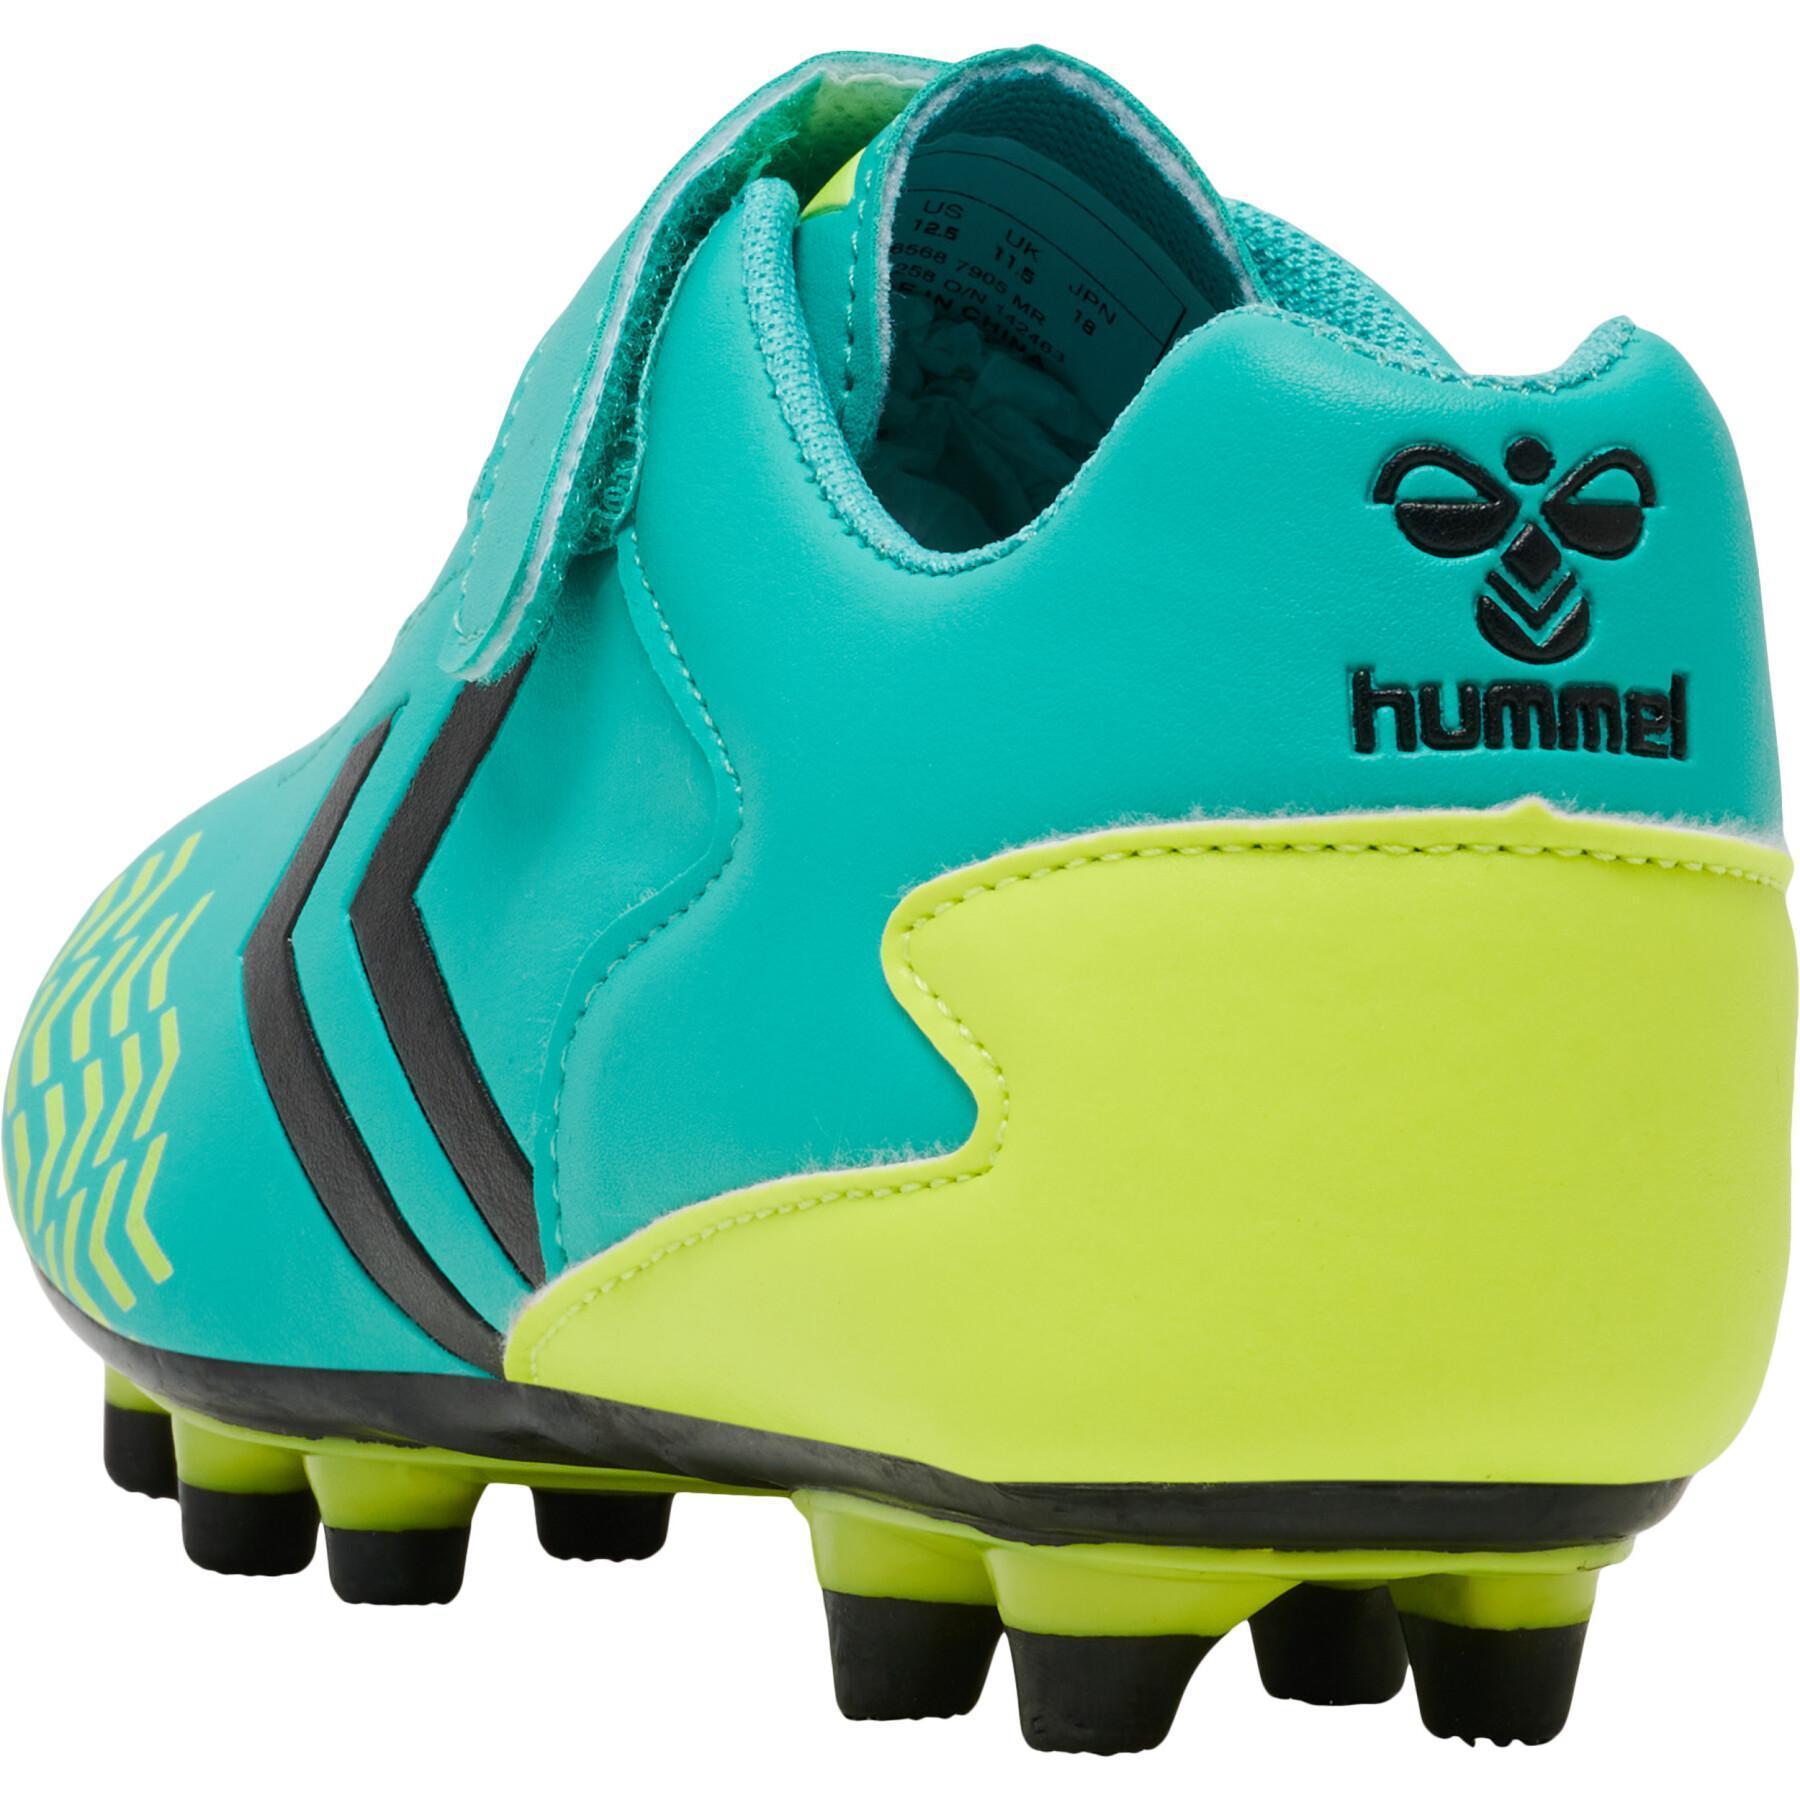 Children's soccer shoes Hummel Top Star F.G.